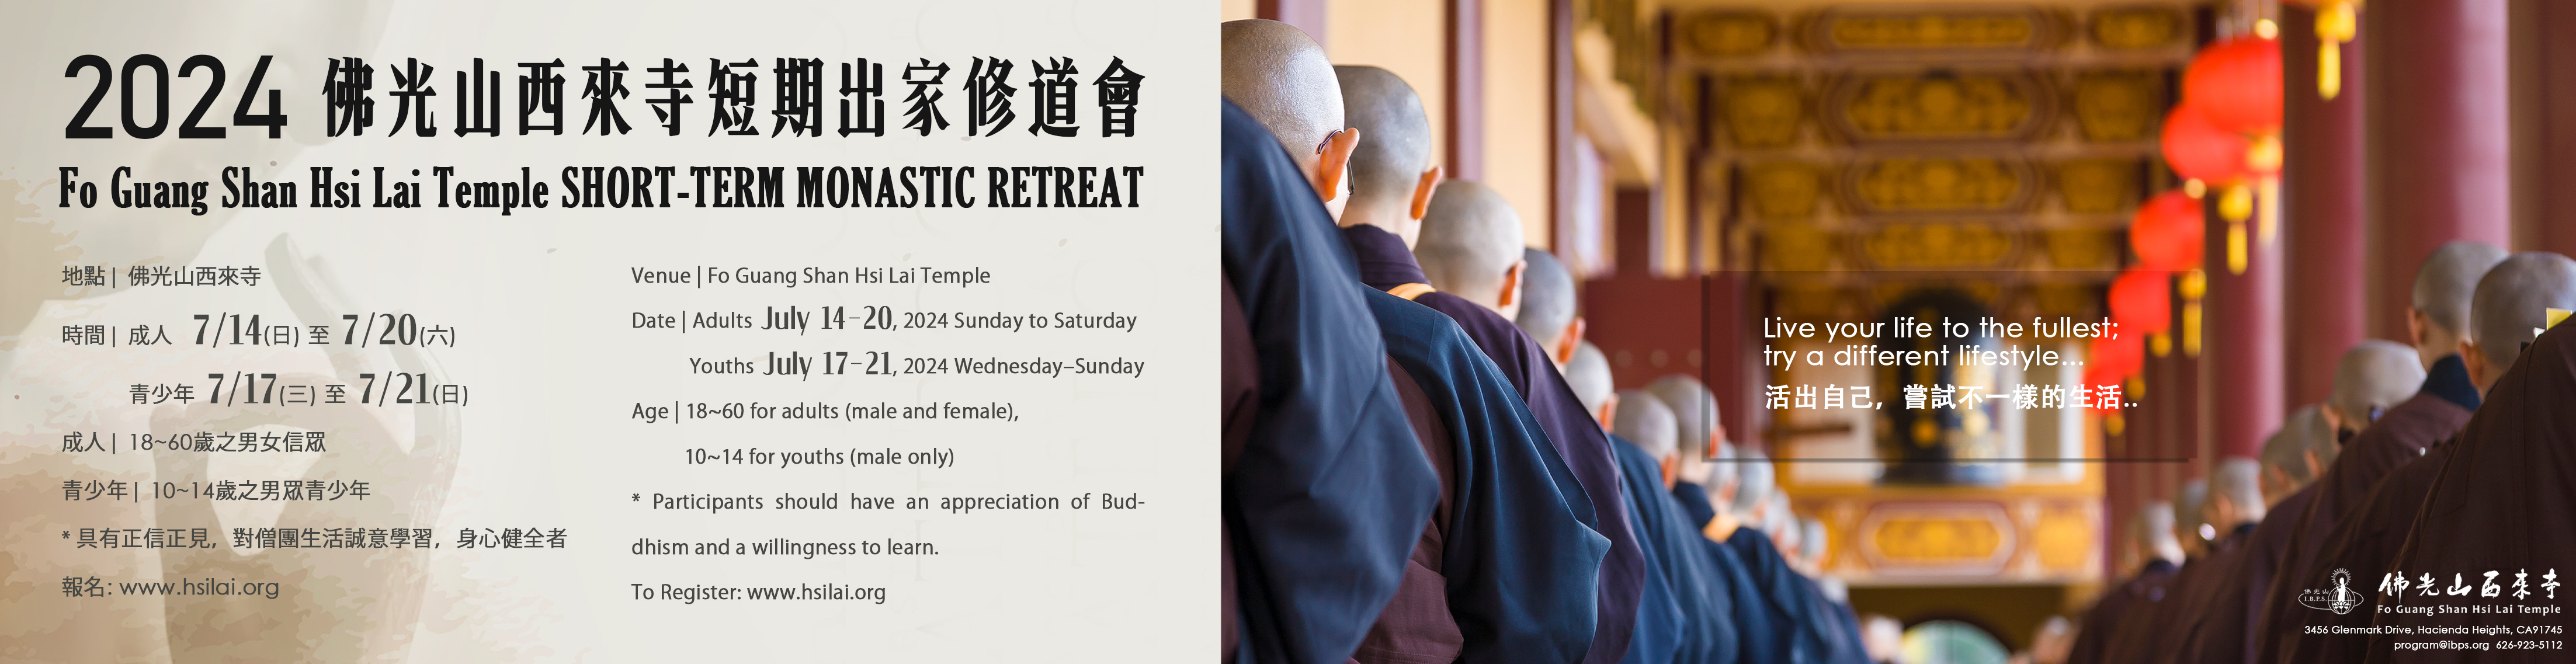 2024 Short Term Monastic Retreat